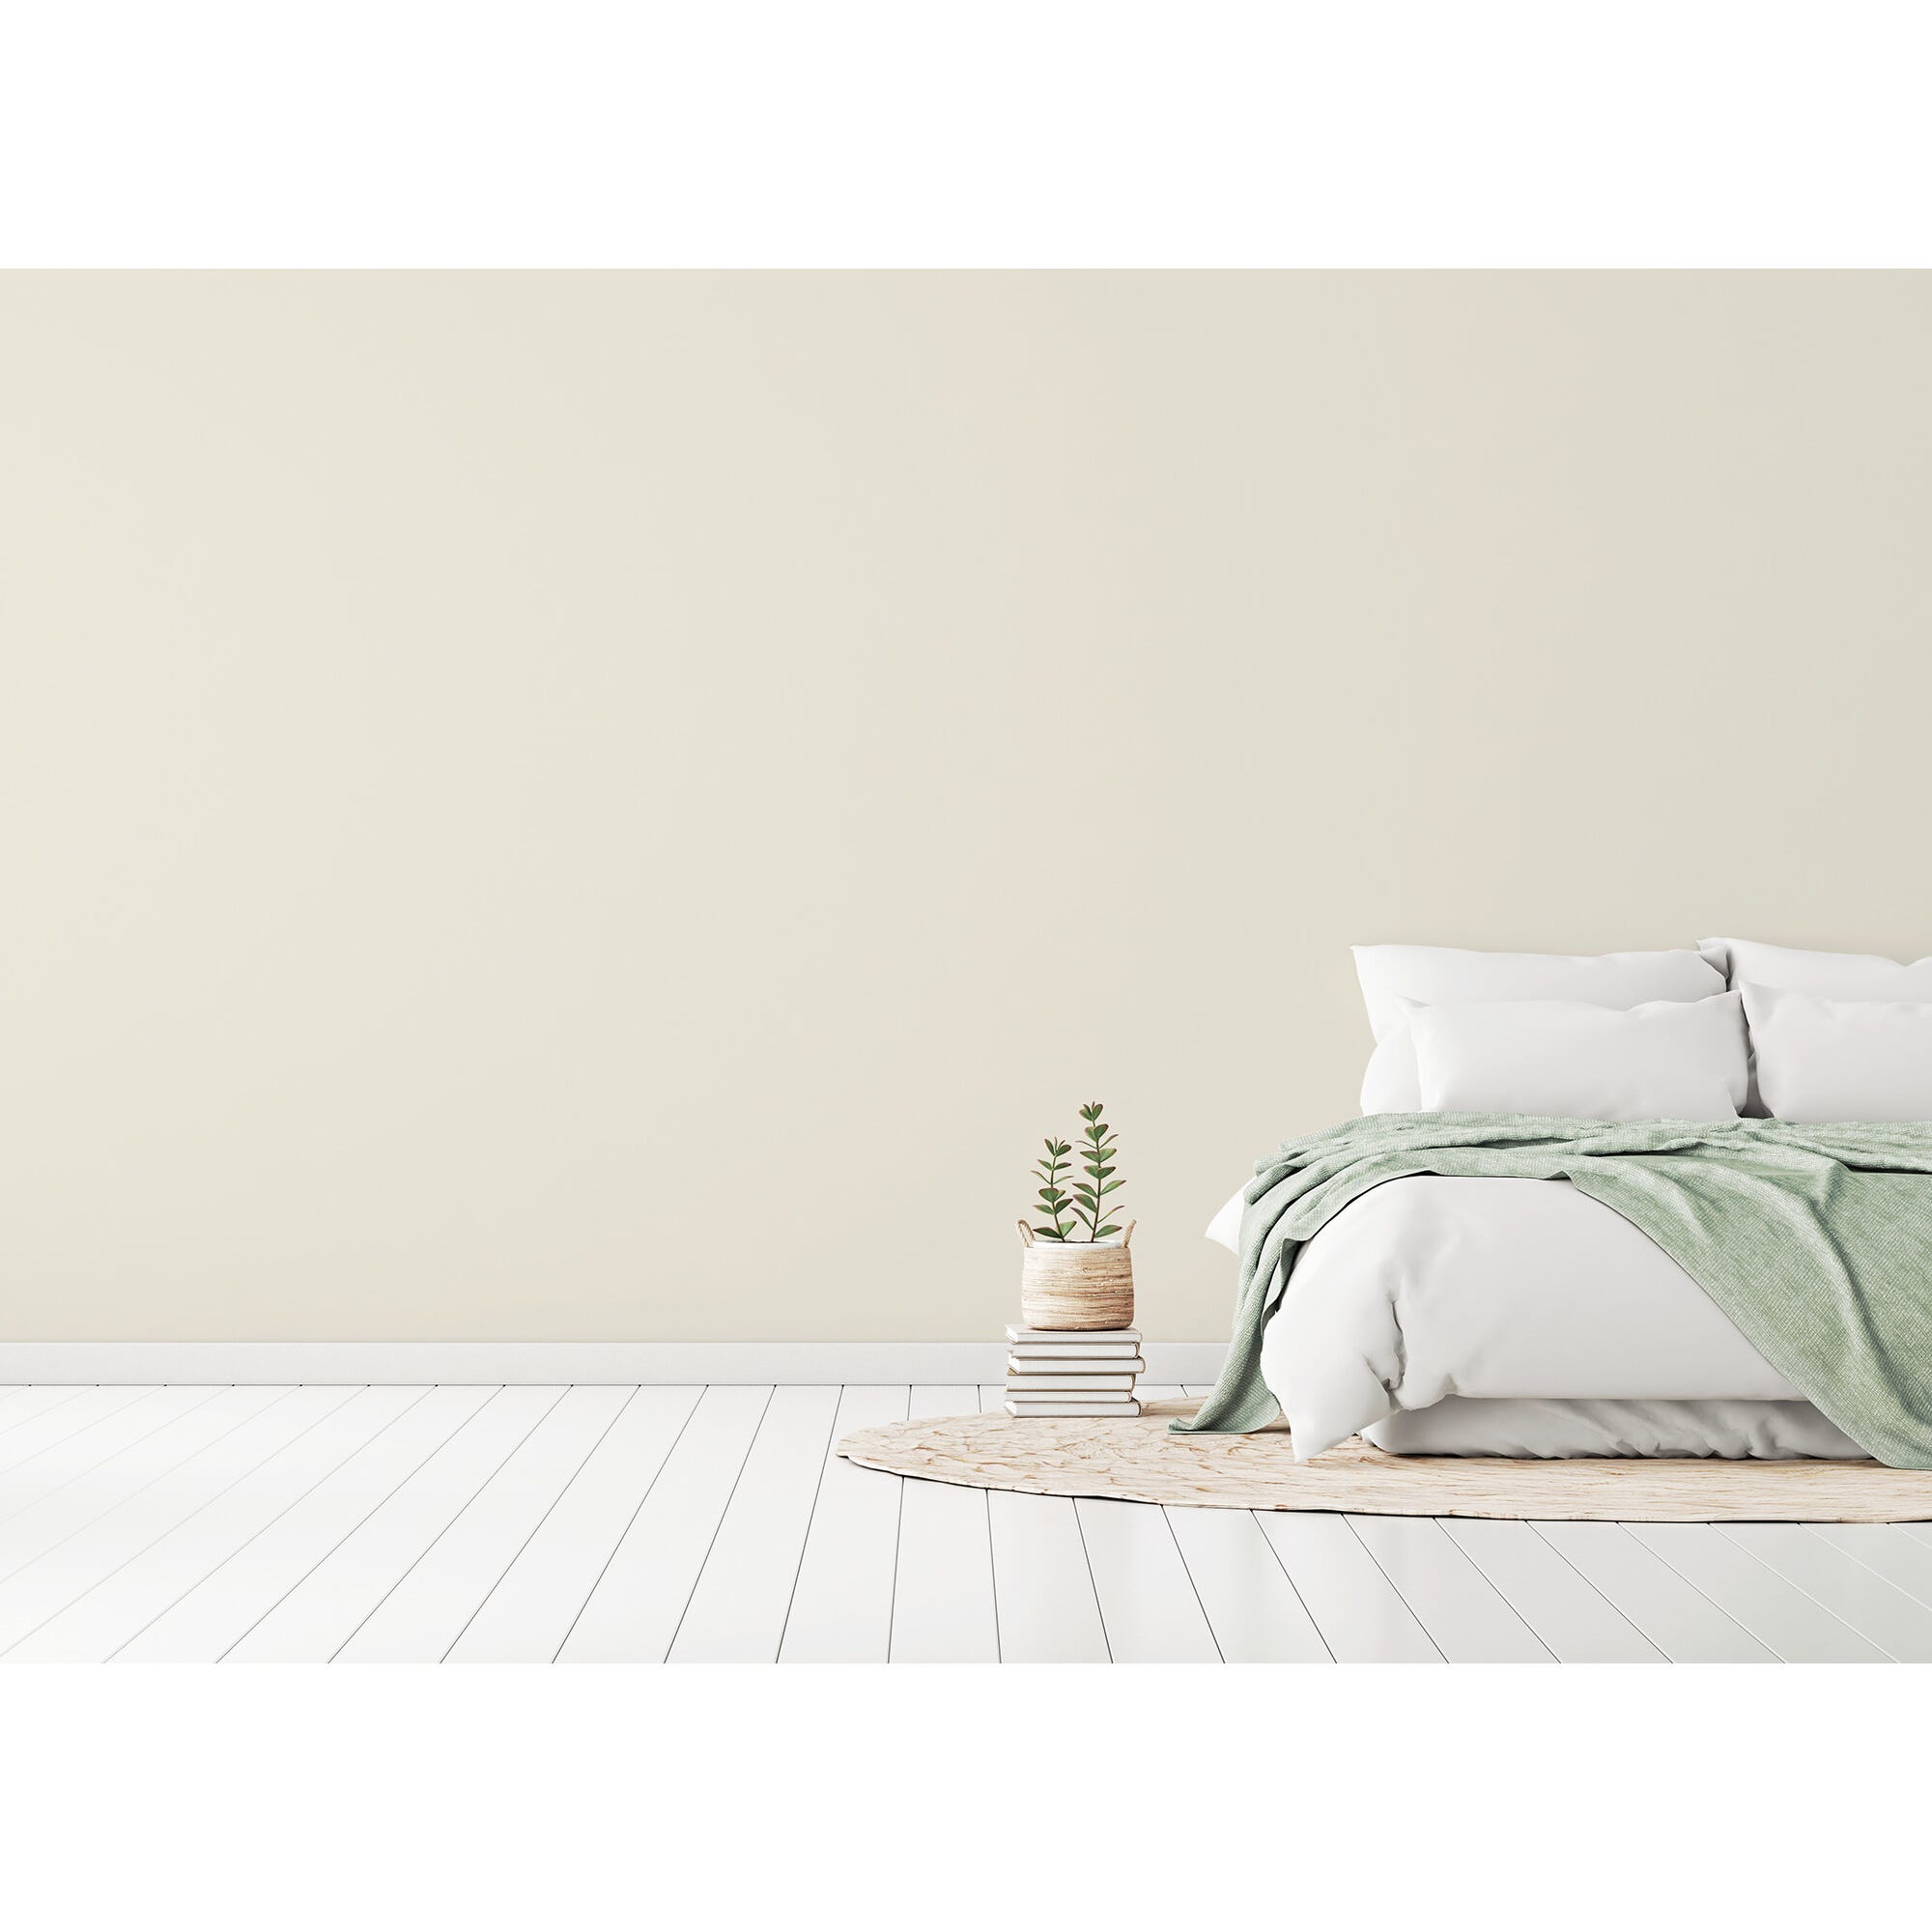 Peinture intérieure mat blanc samoens teintée en machine 10L HPO - MOSAIK 4